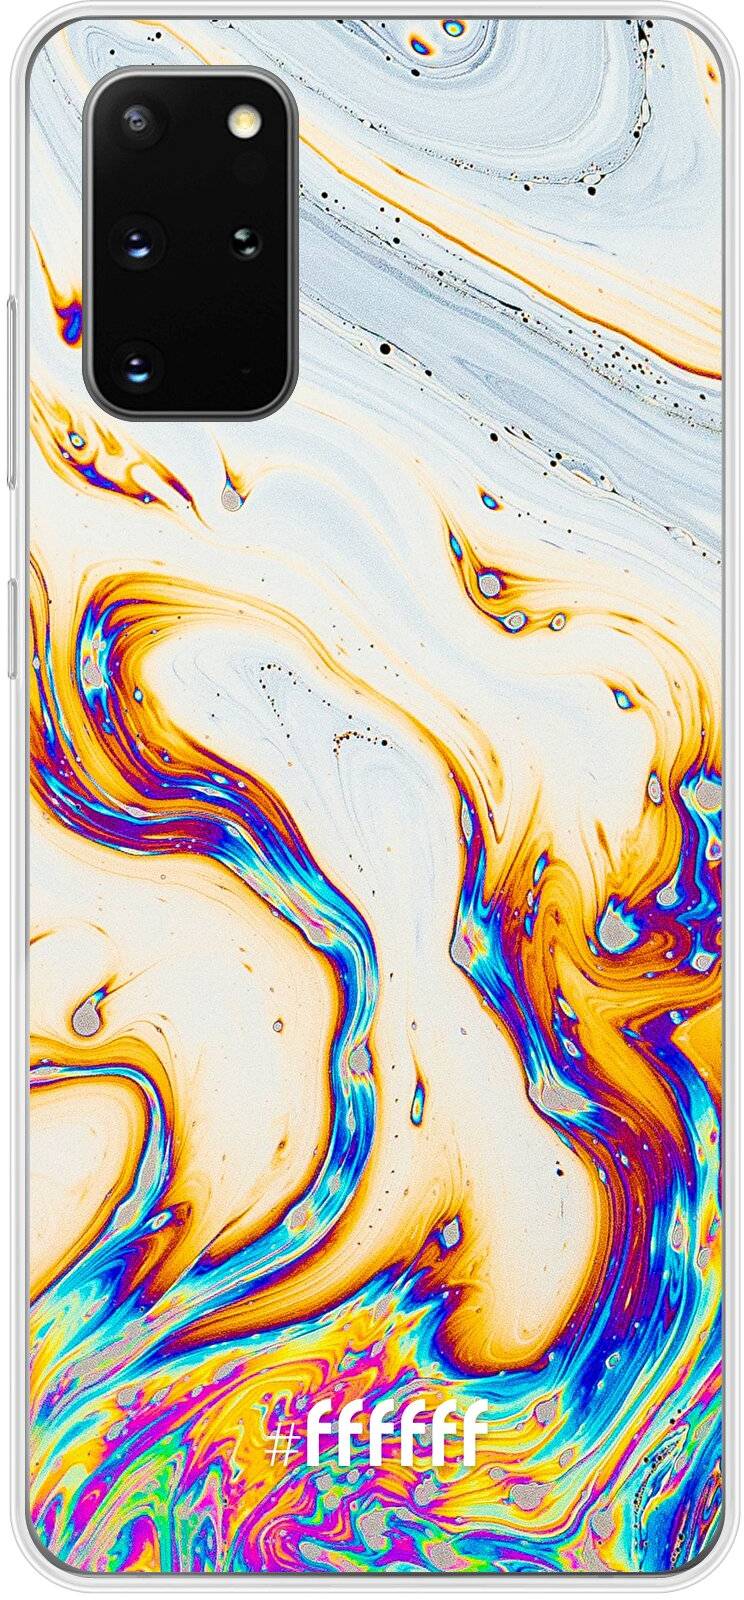 Bubble Texture Galaxy S20+